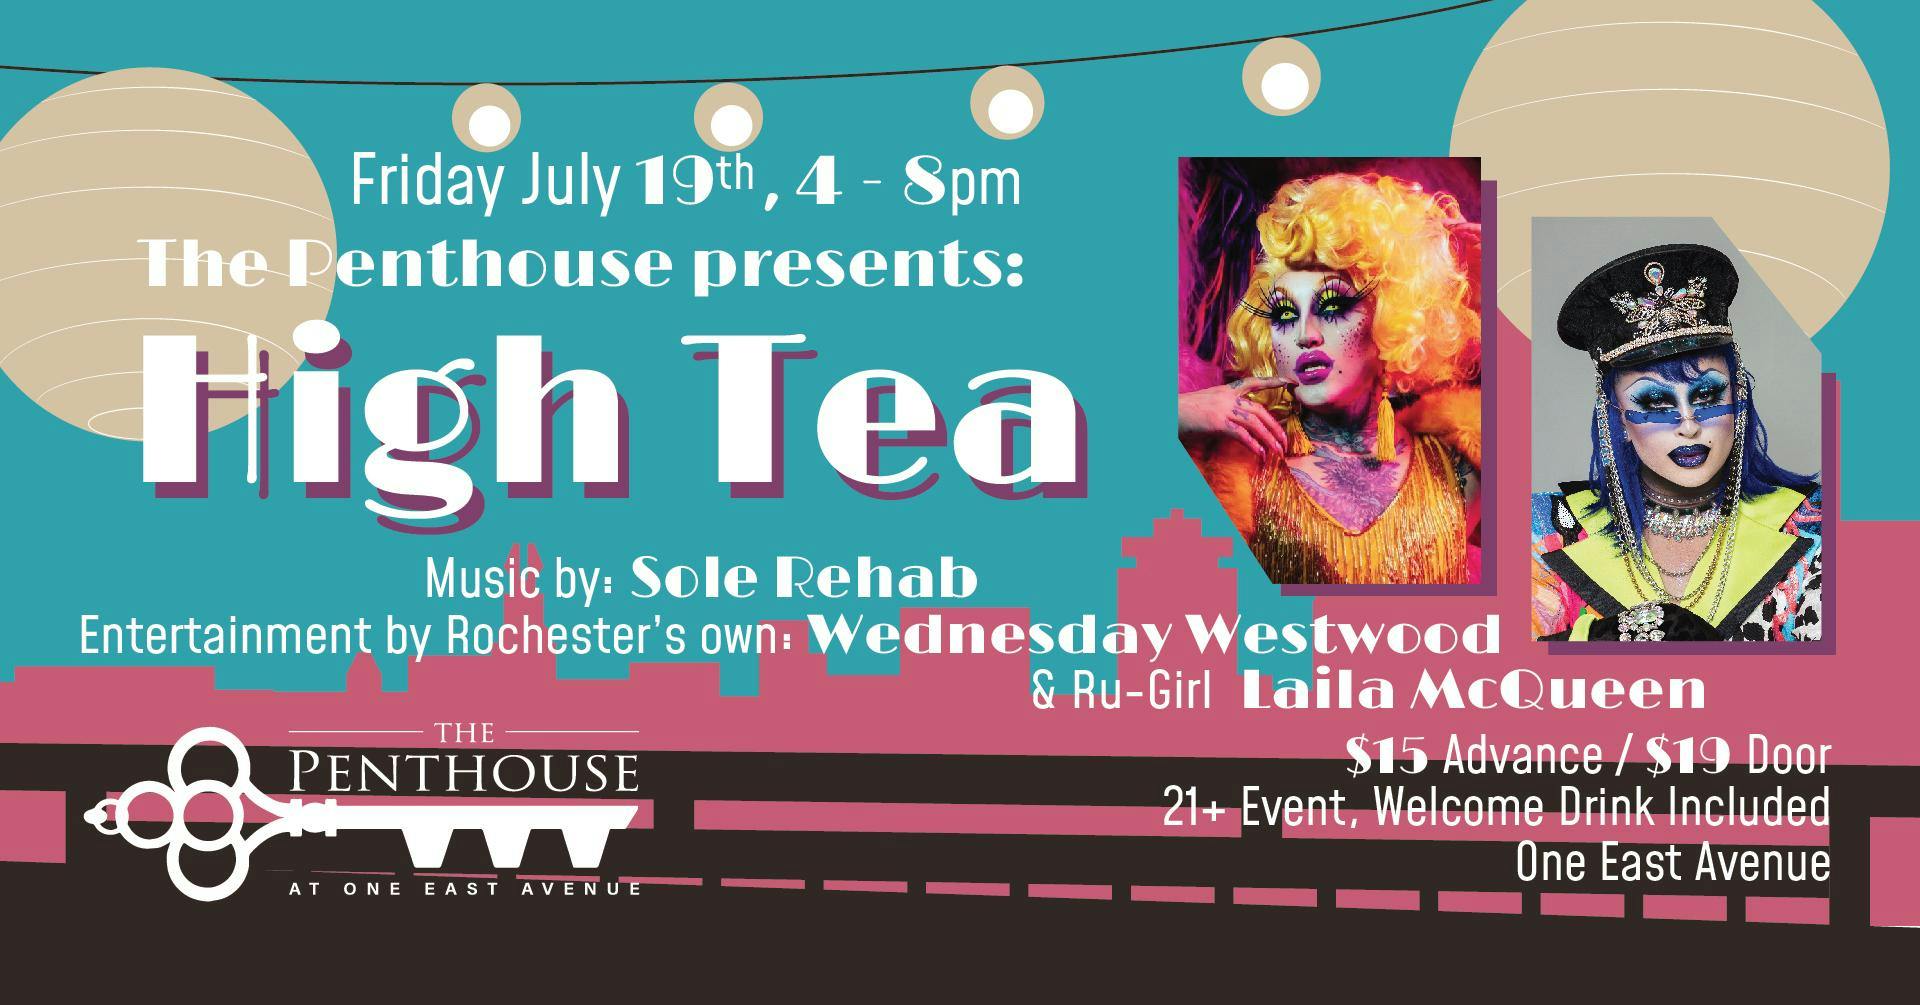 The Penthouse Presents: High Tea